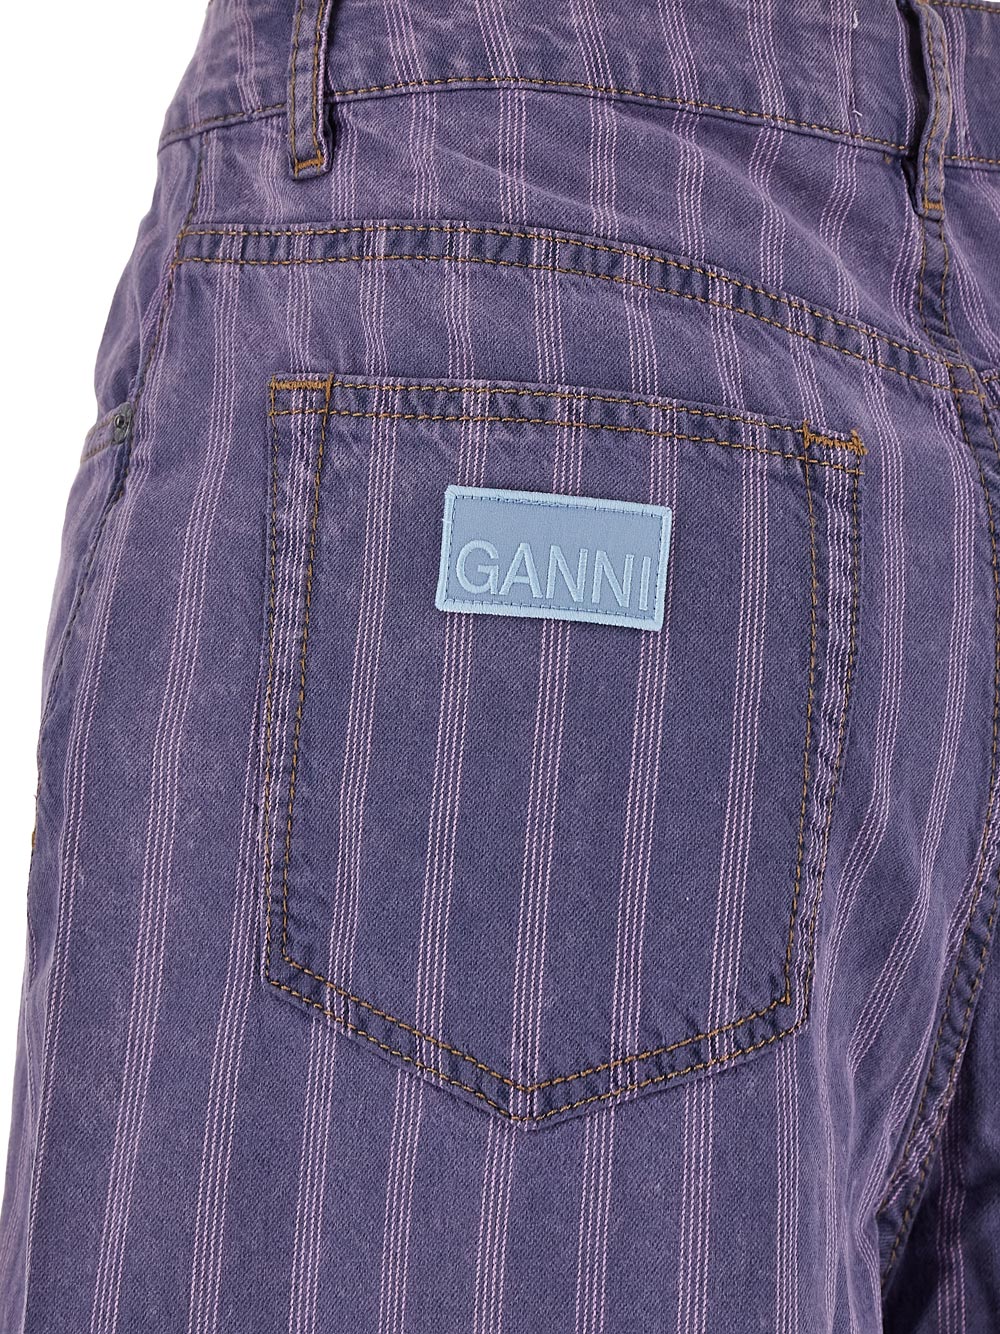 Ganni Purple Striped Stary Jeans